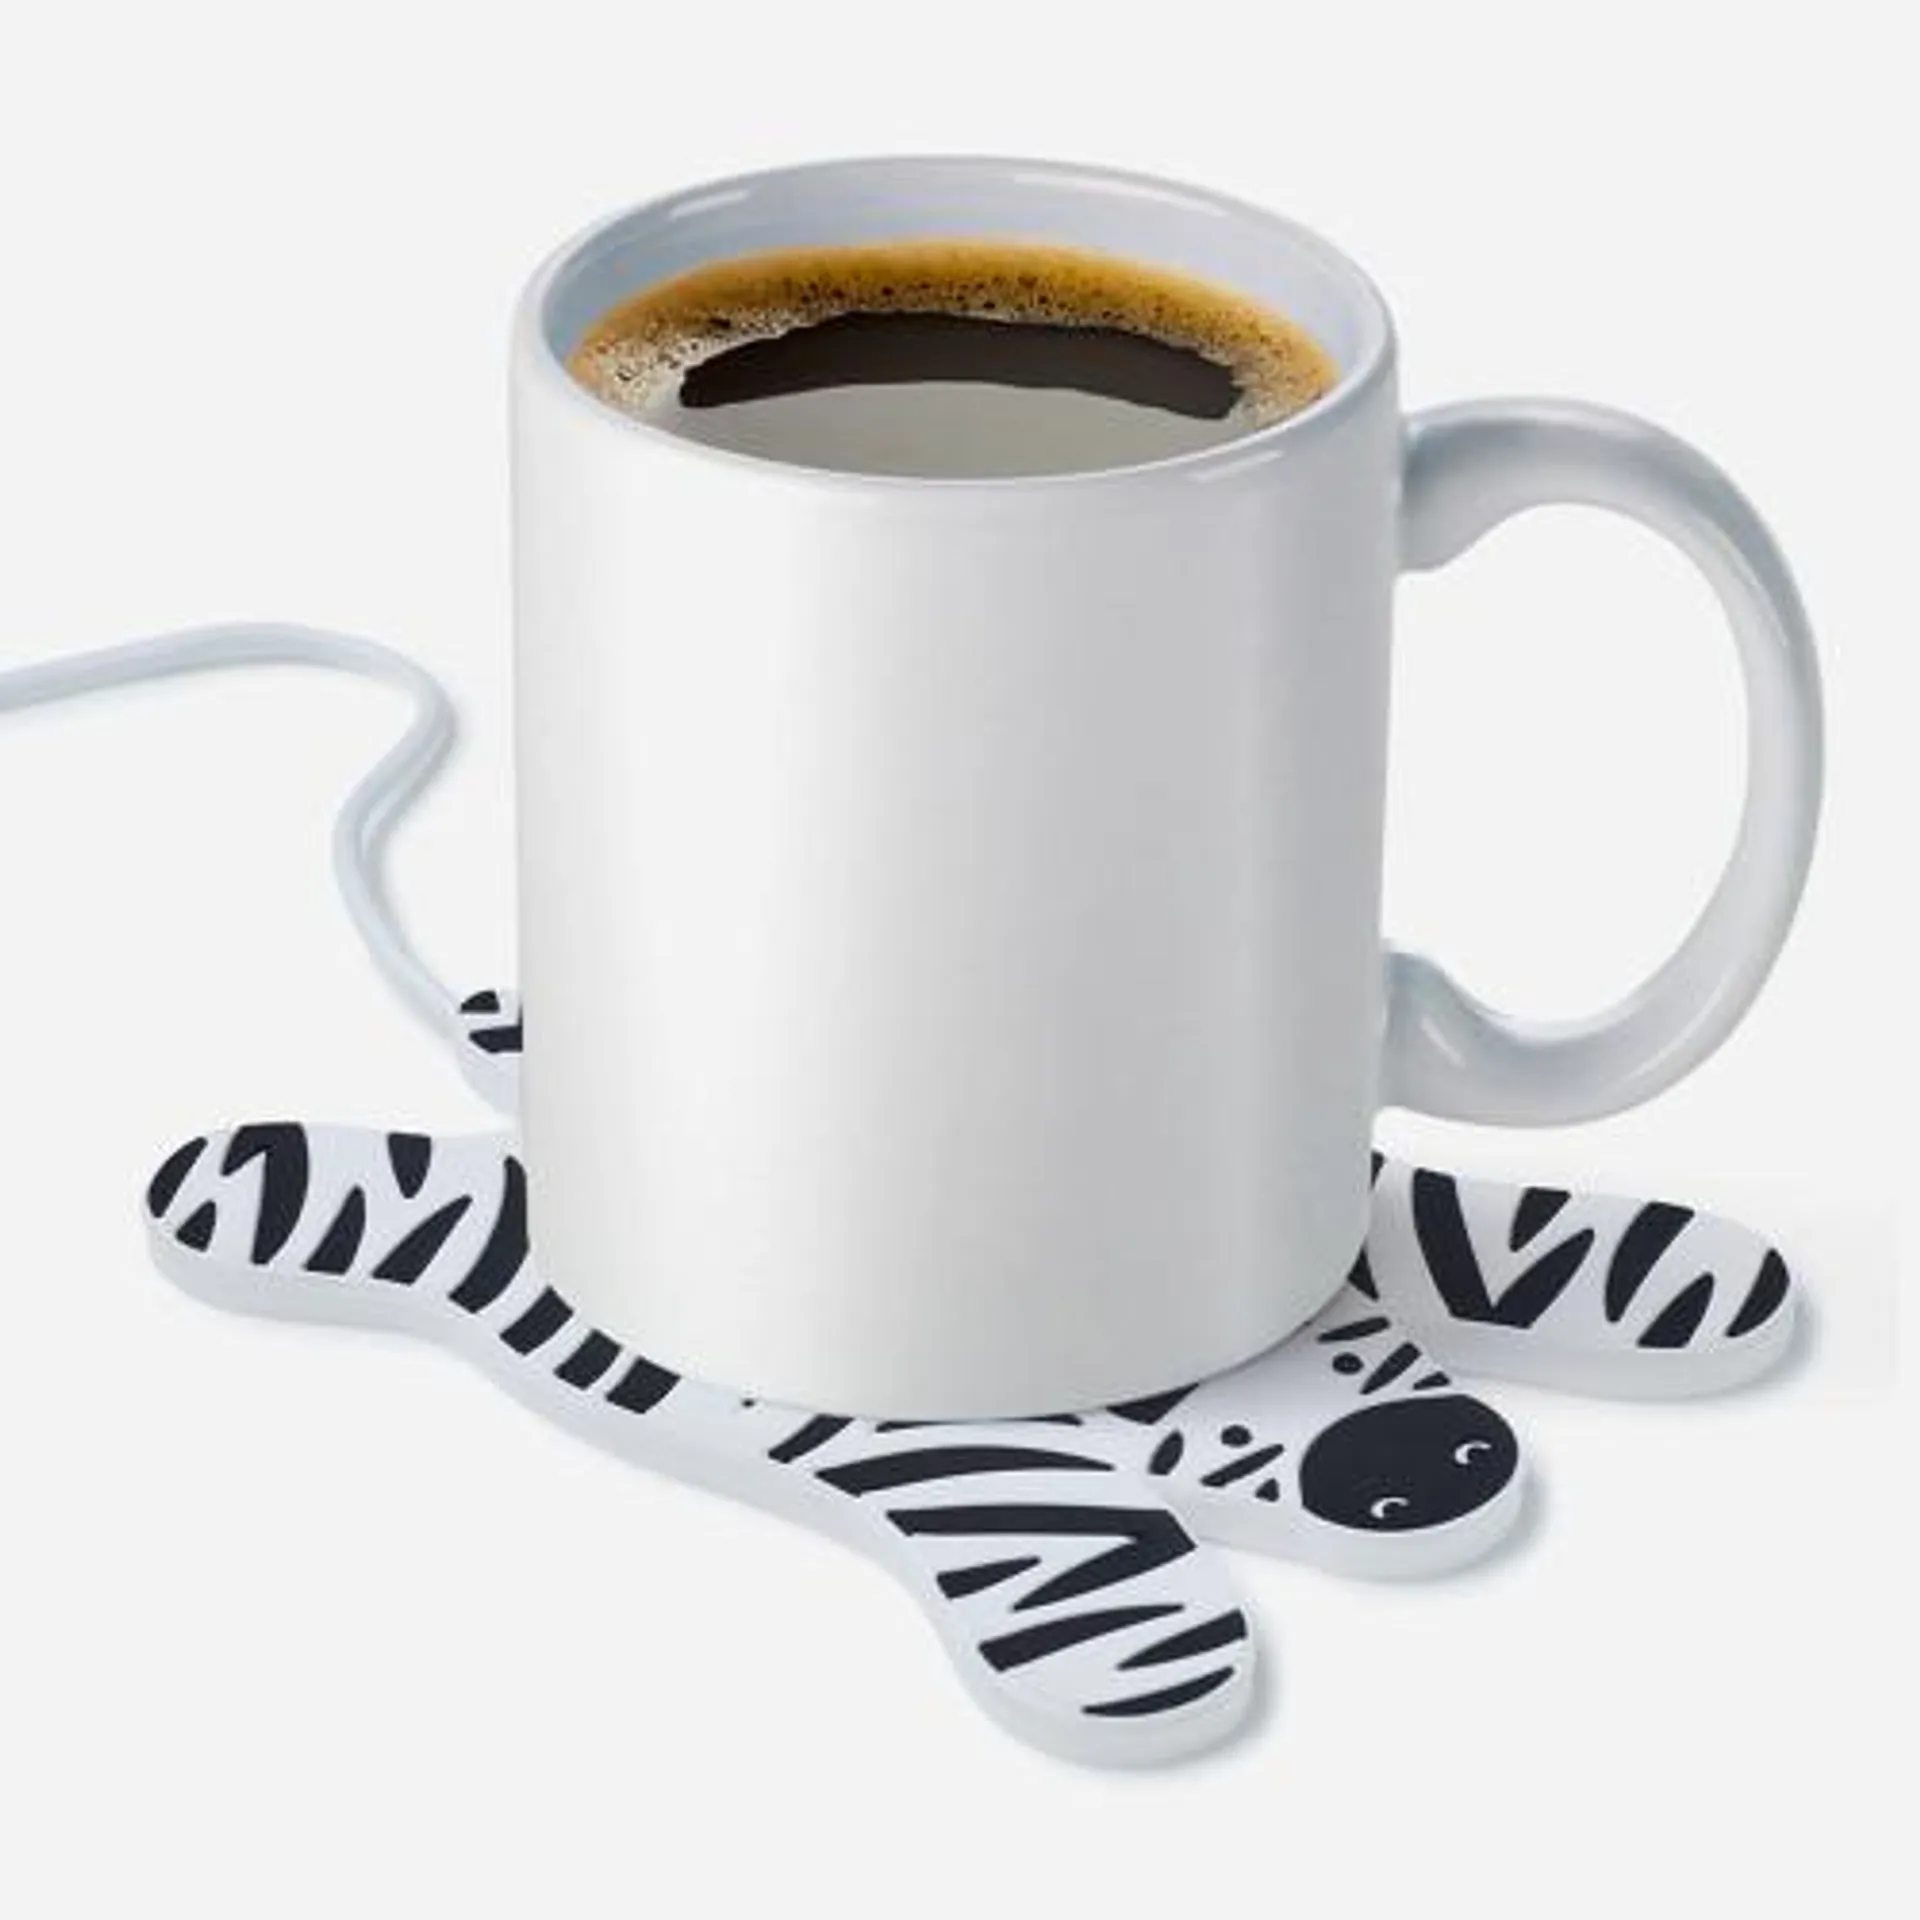 Sleepy Zebra USB Cup Warmer